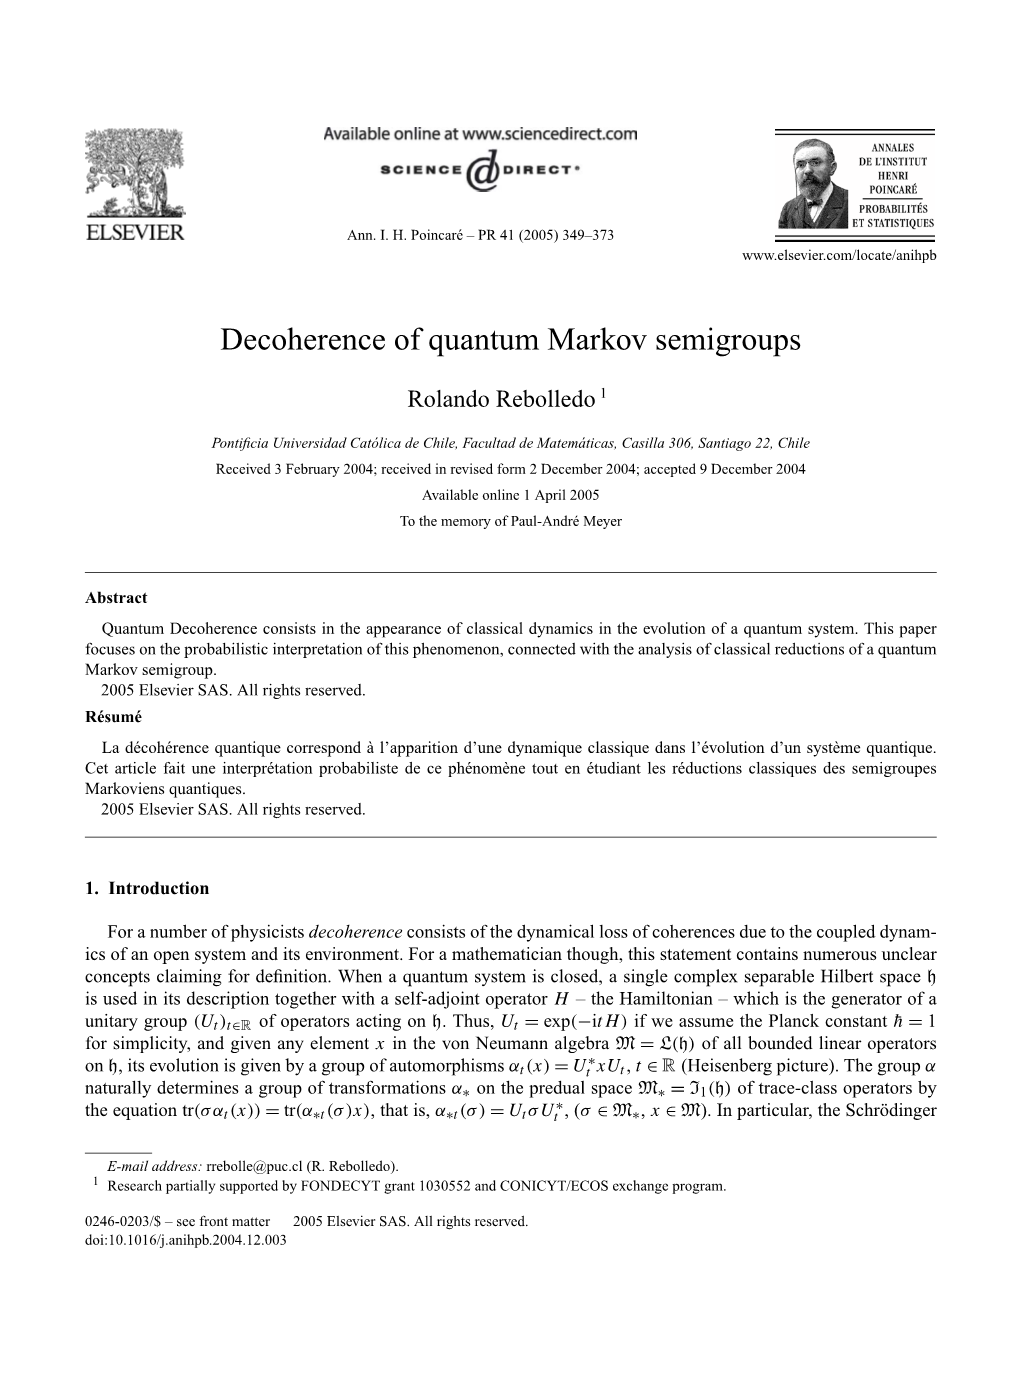 Decoherence of Quantum Markov Semigroups